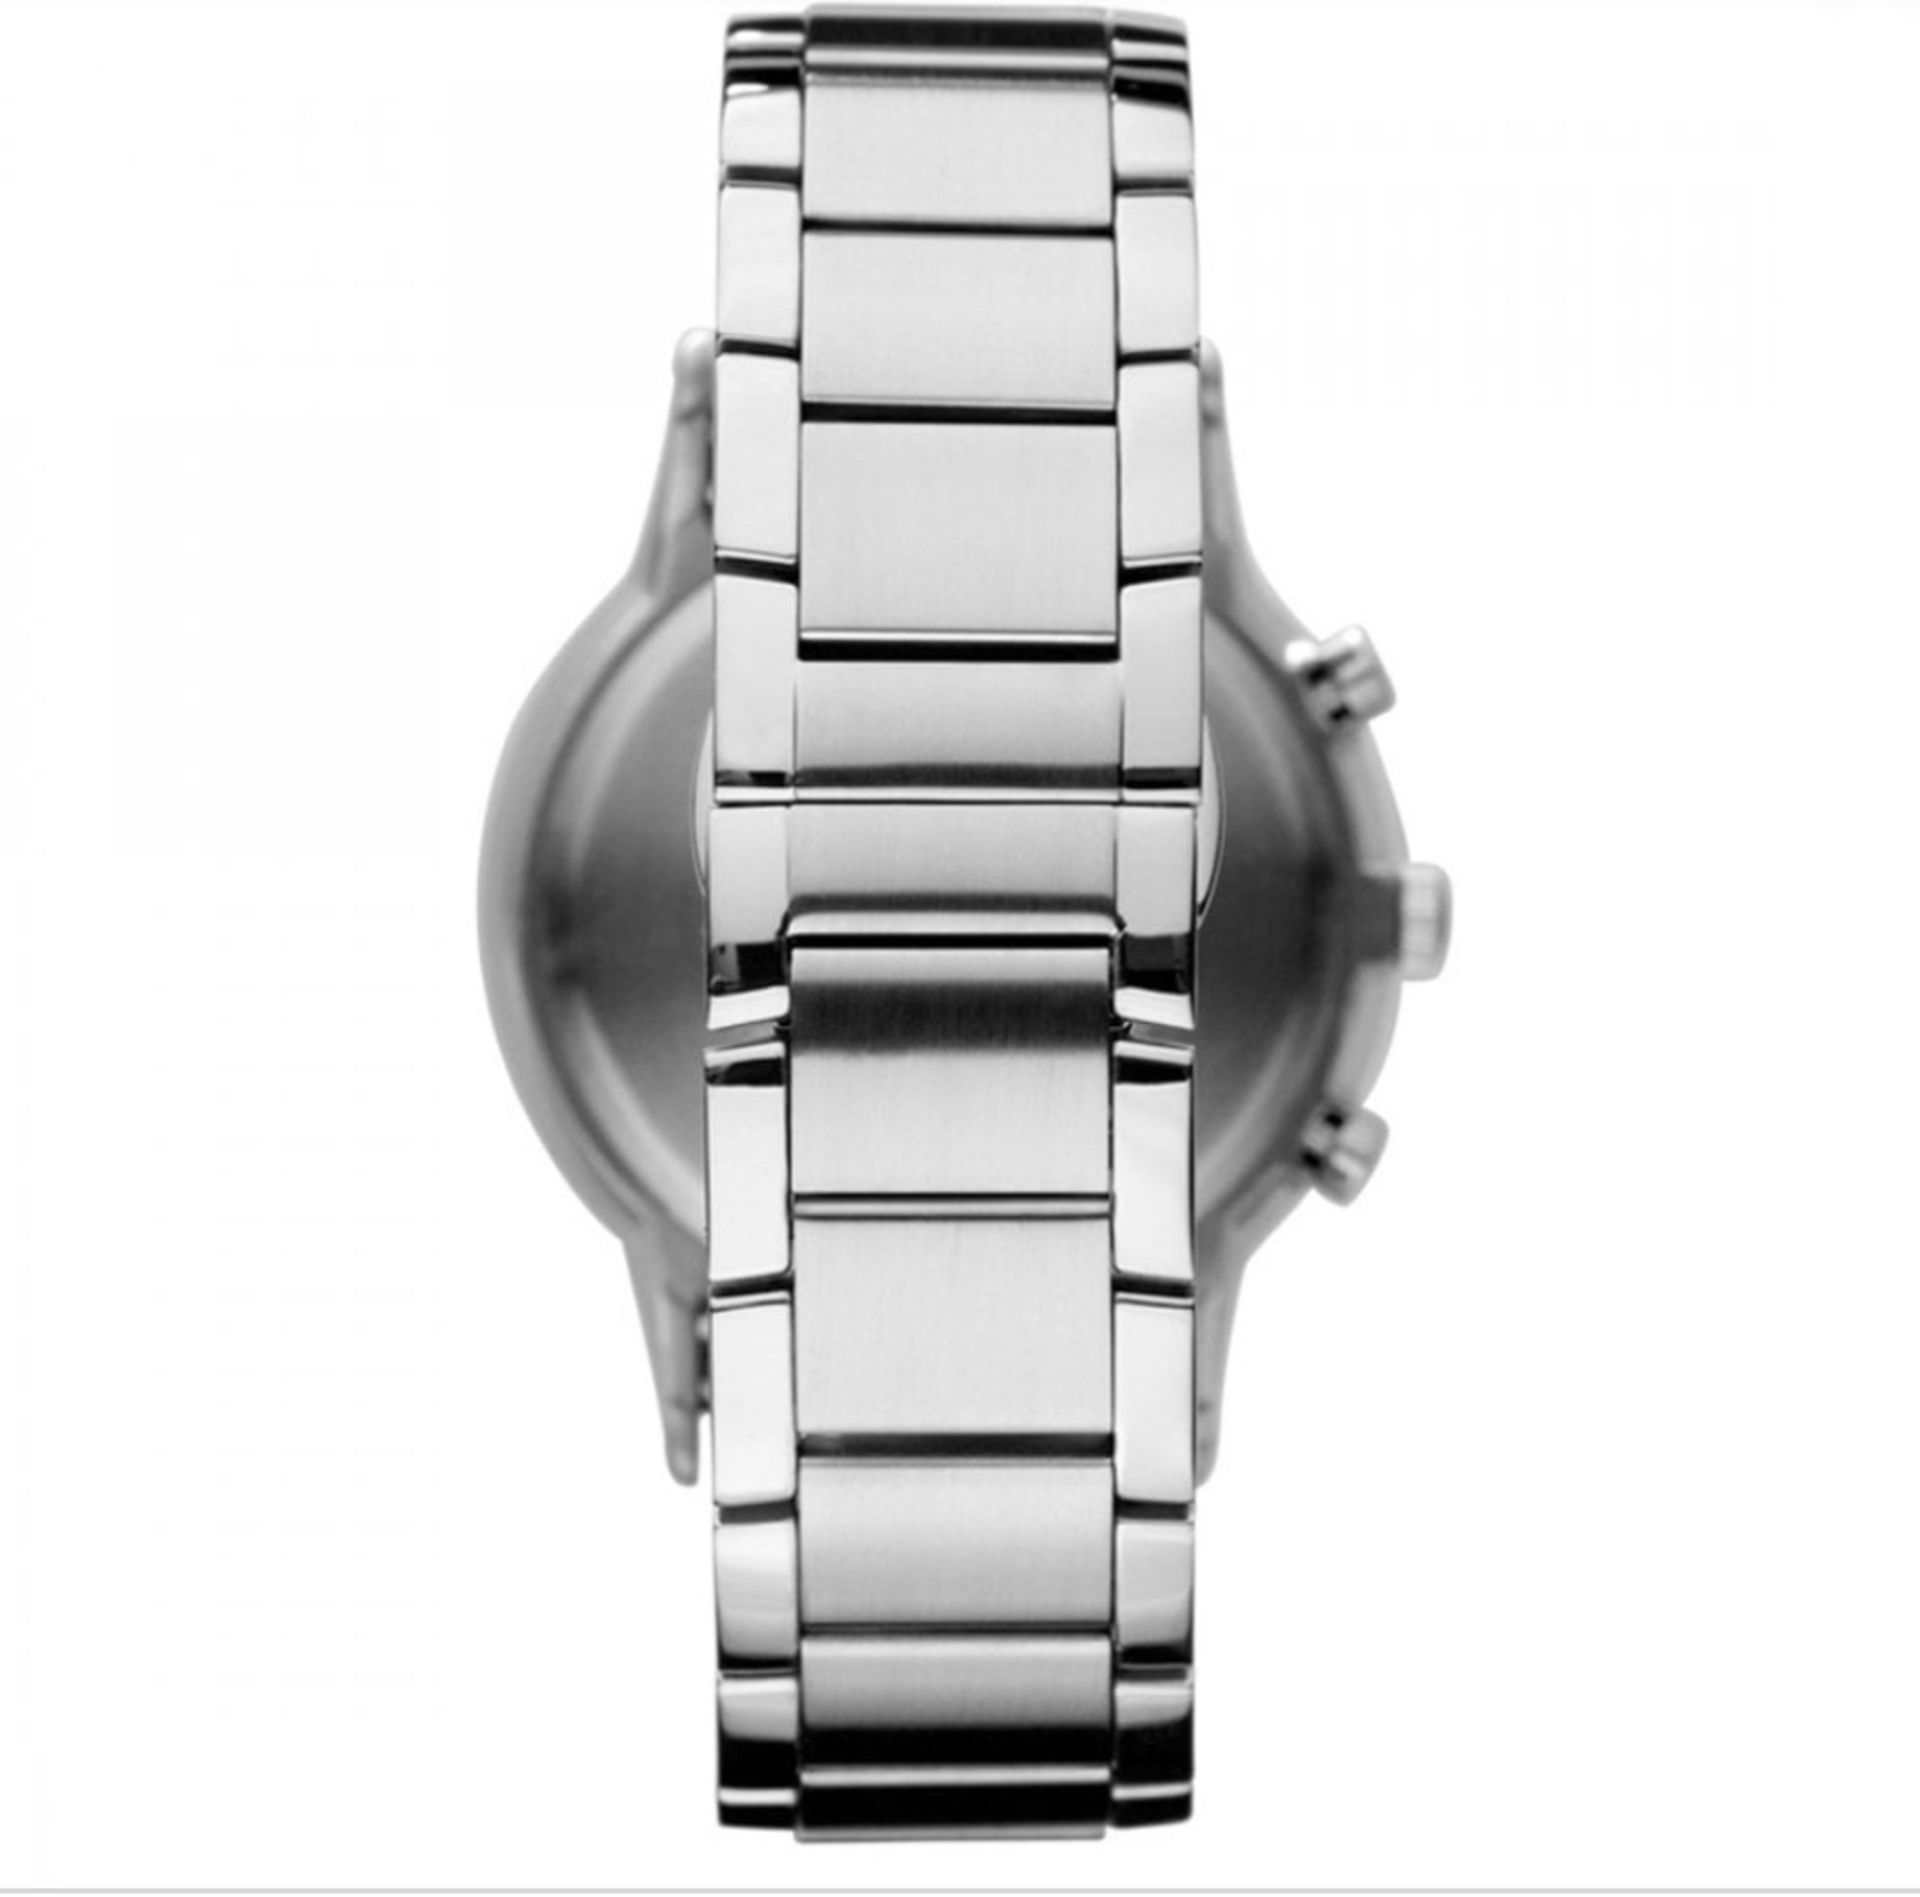 Emporio Armani AR11164 Men's Blue Dial Silver Bracelet Chronograph Watch - Image 2 of 5